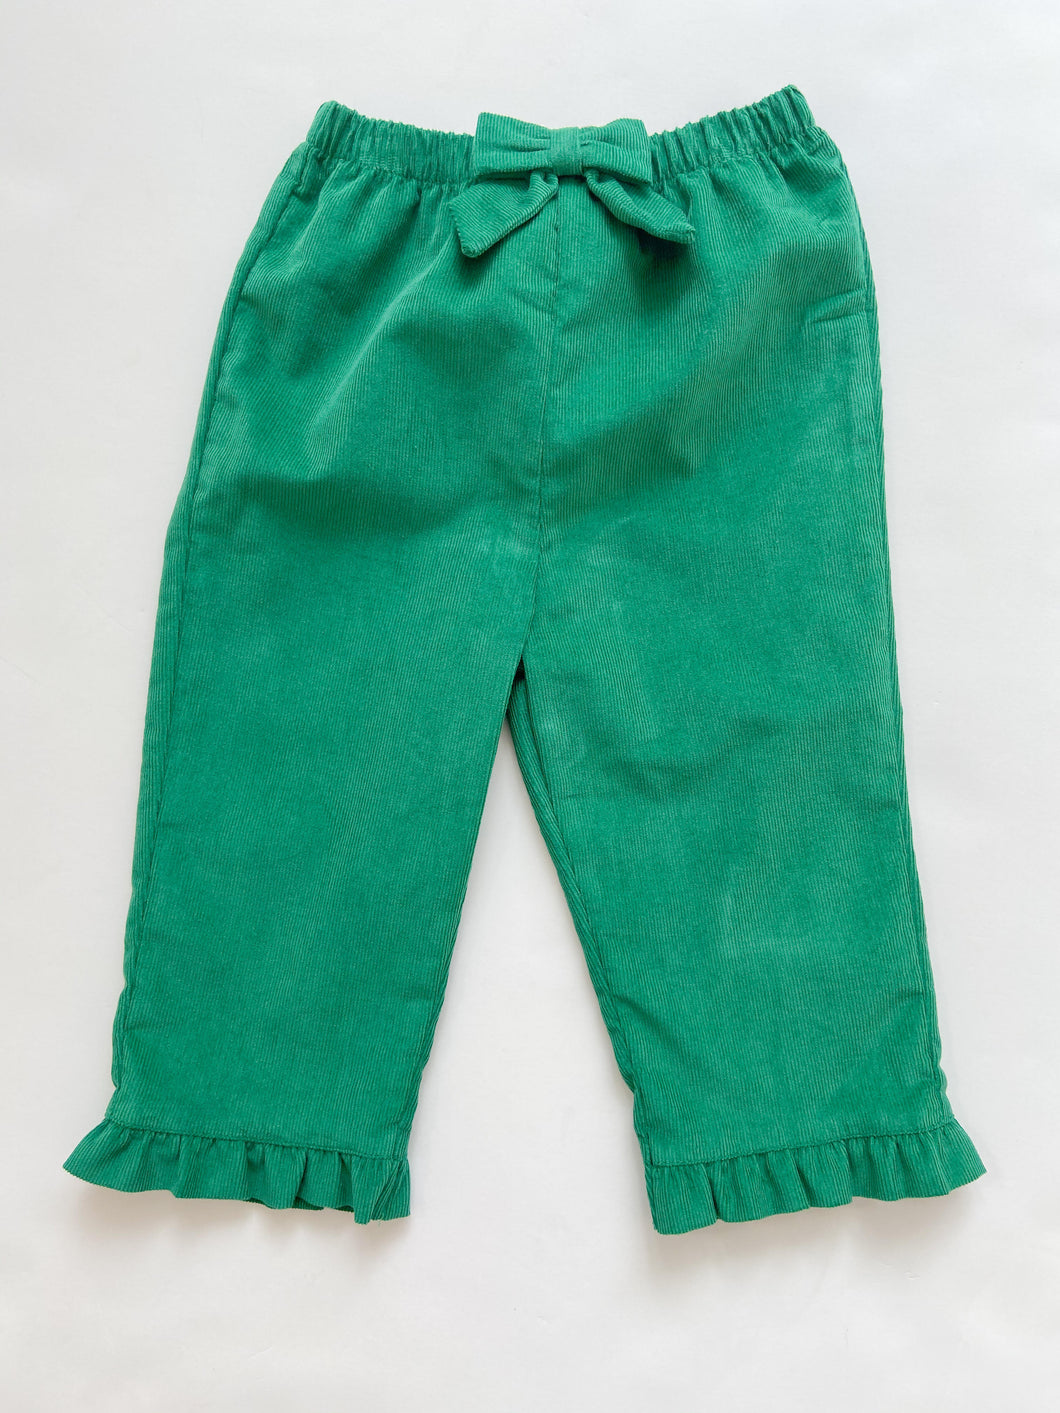 Green Cord Girl Pant 326PG - Infant